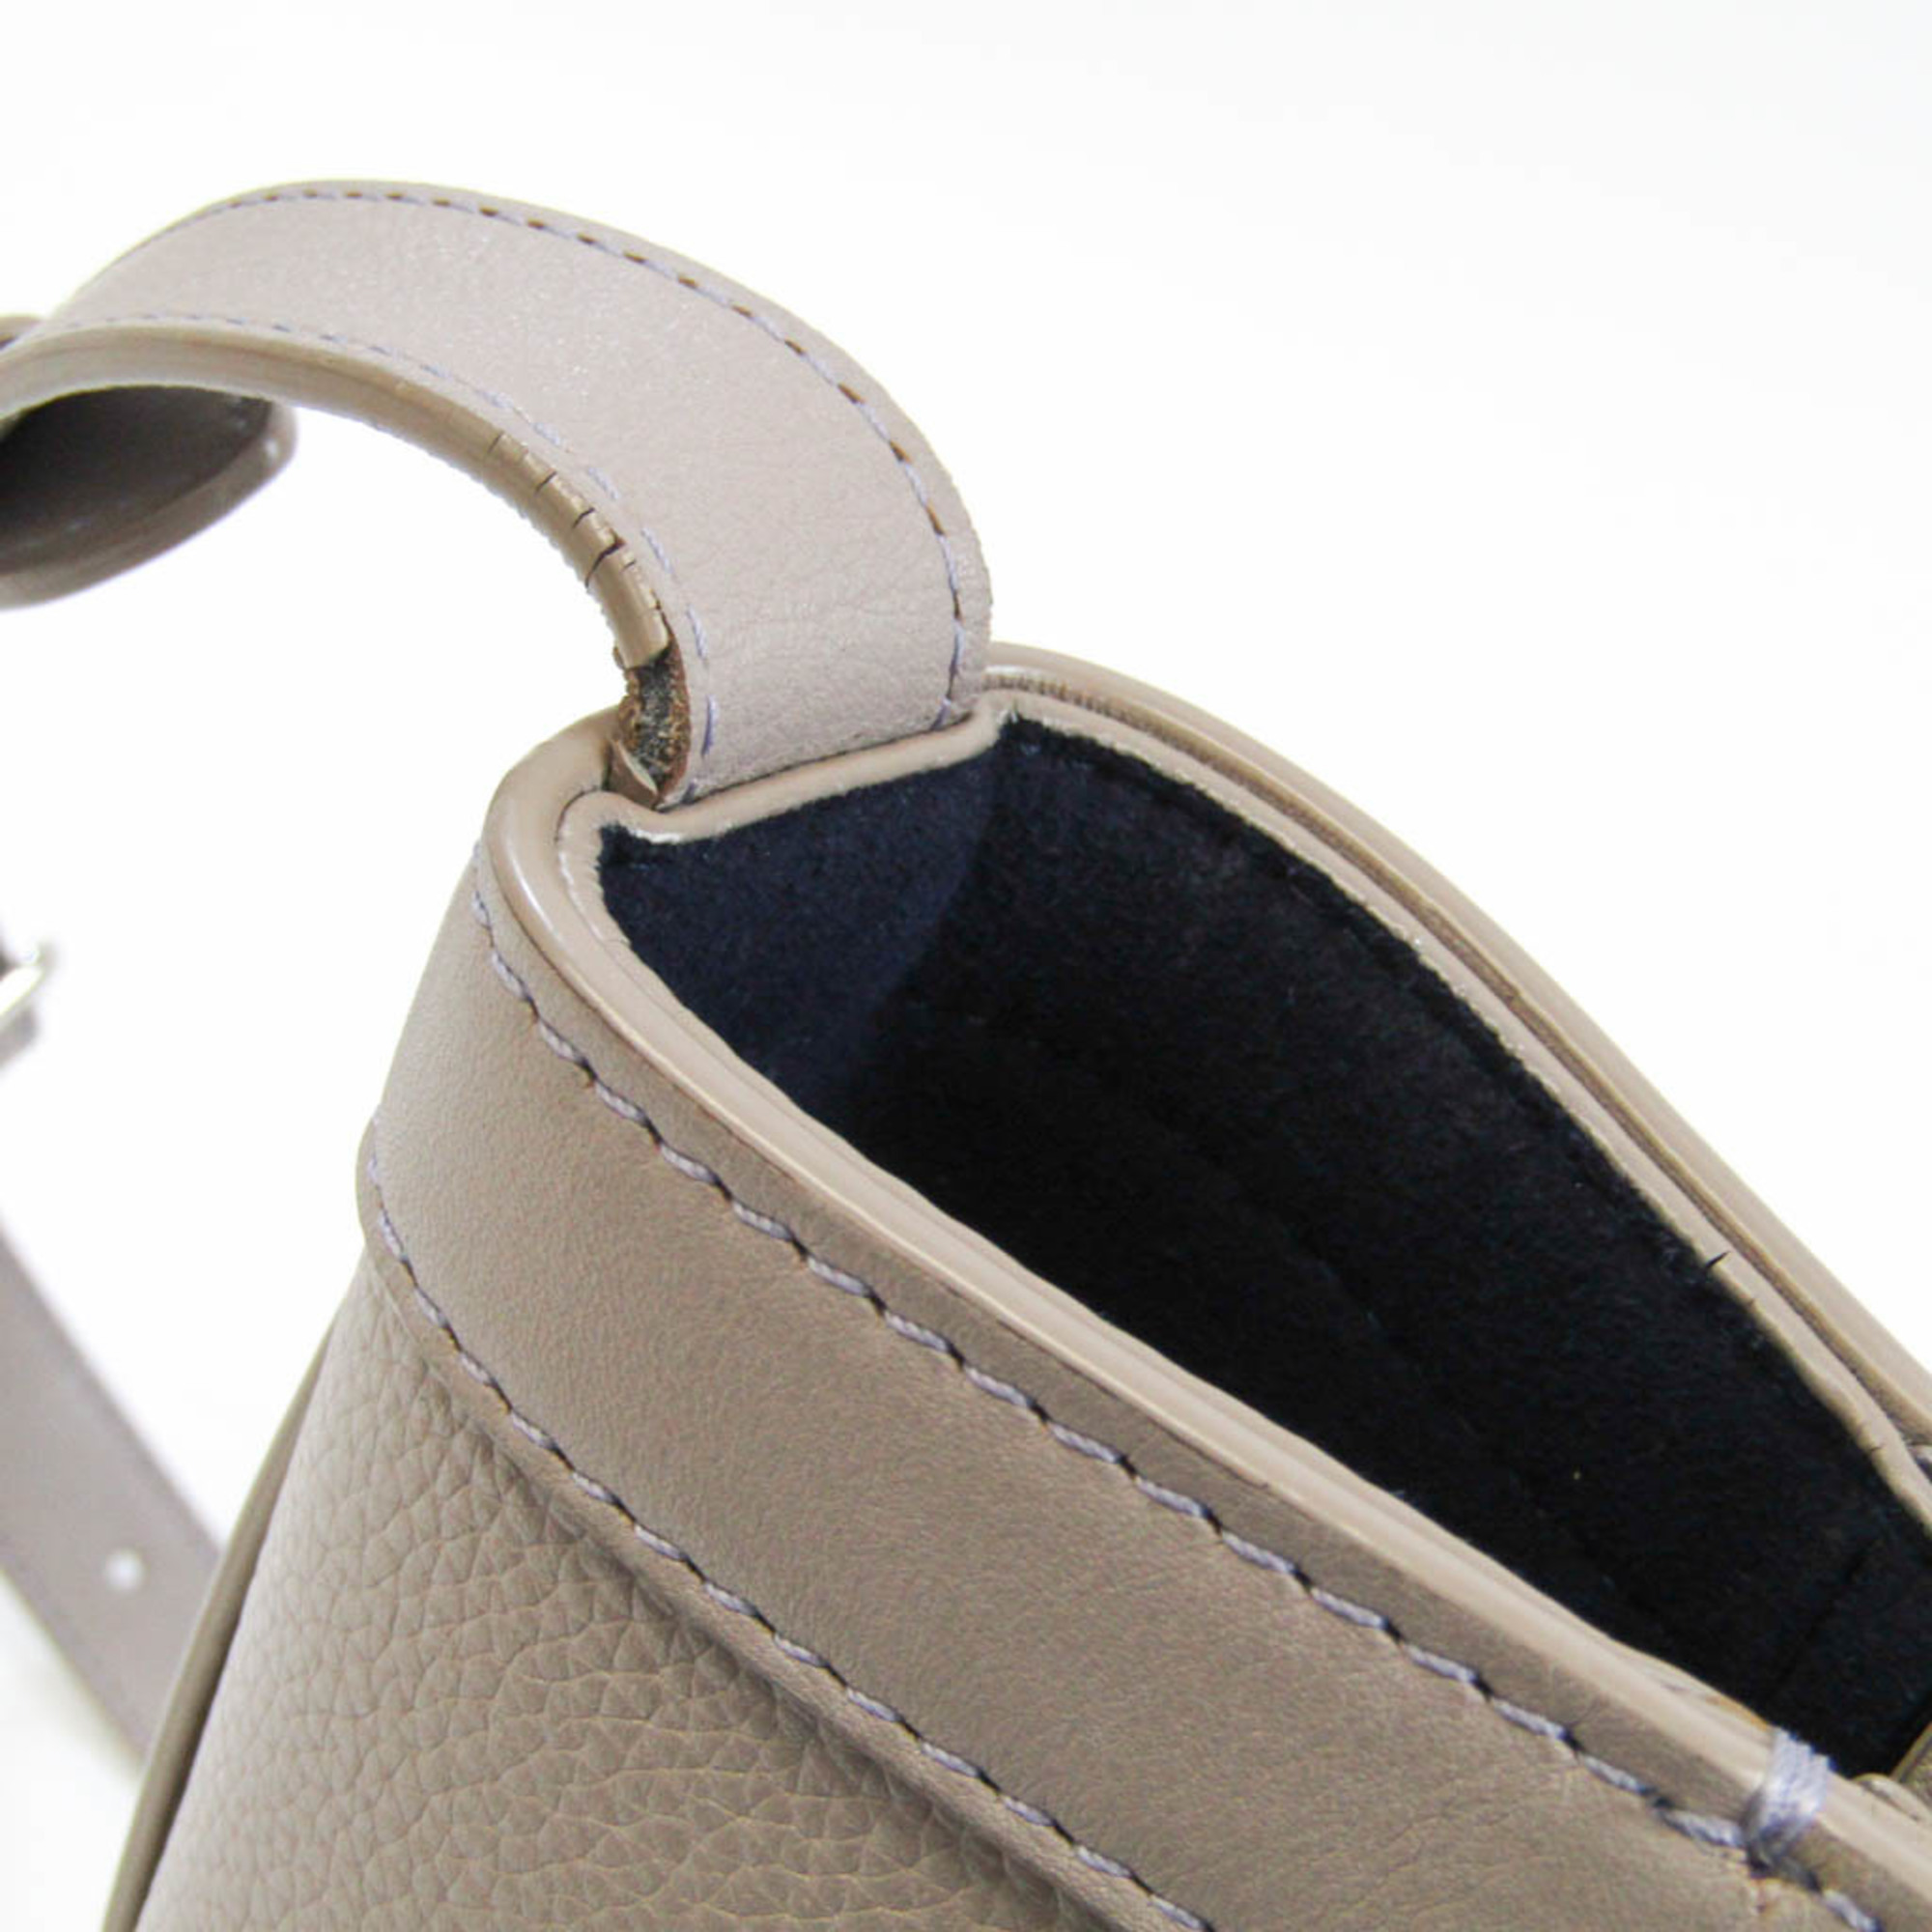 J&M Davidson SMALL TONNE Women's Leather Shoulder Bag Gray Beige